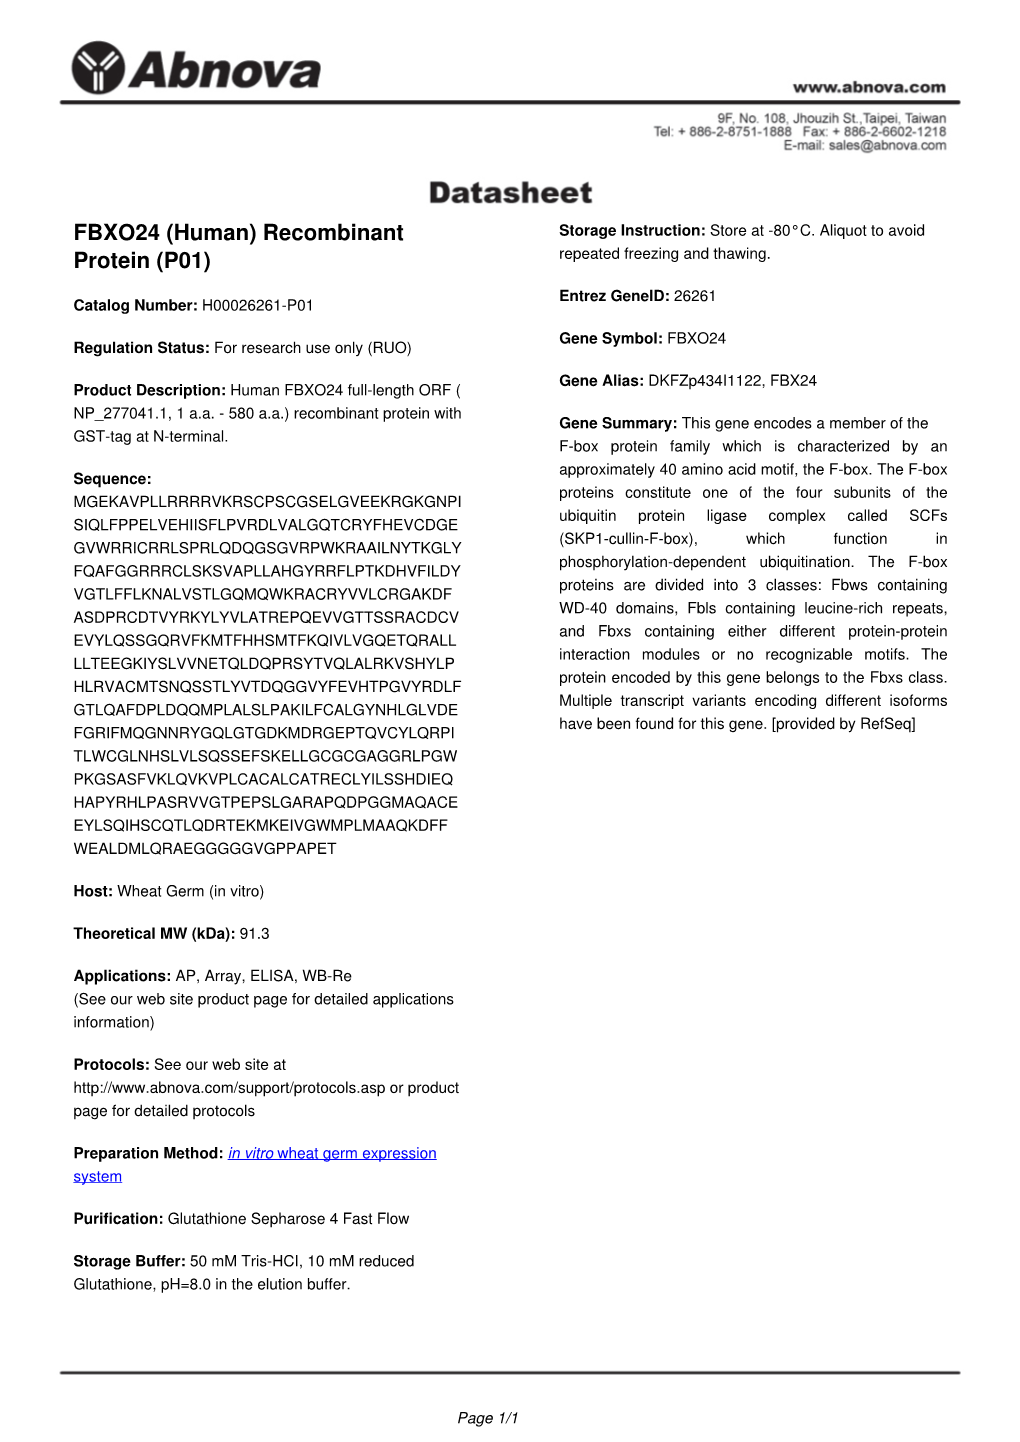 FBXO24 (Human) Recombinant Protein (P01)